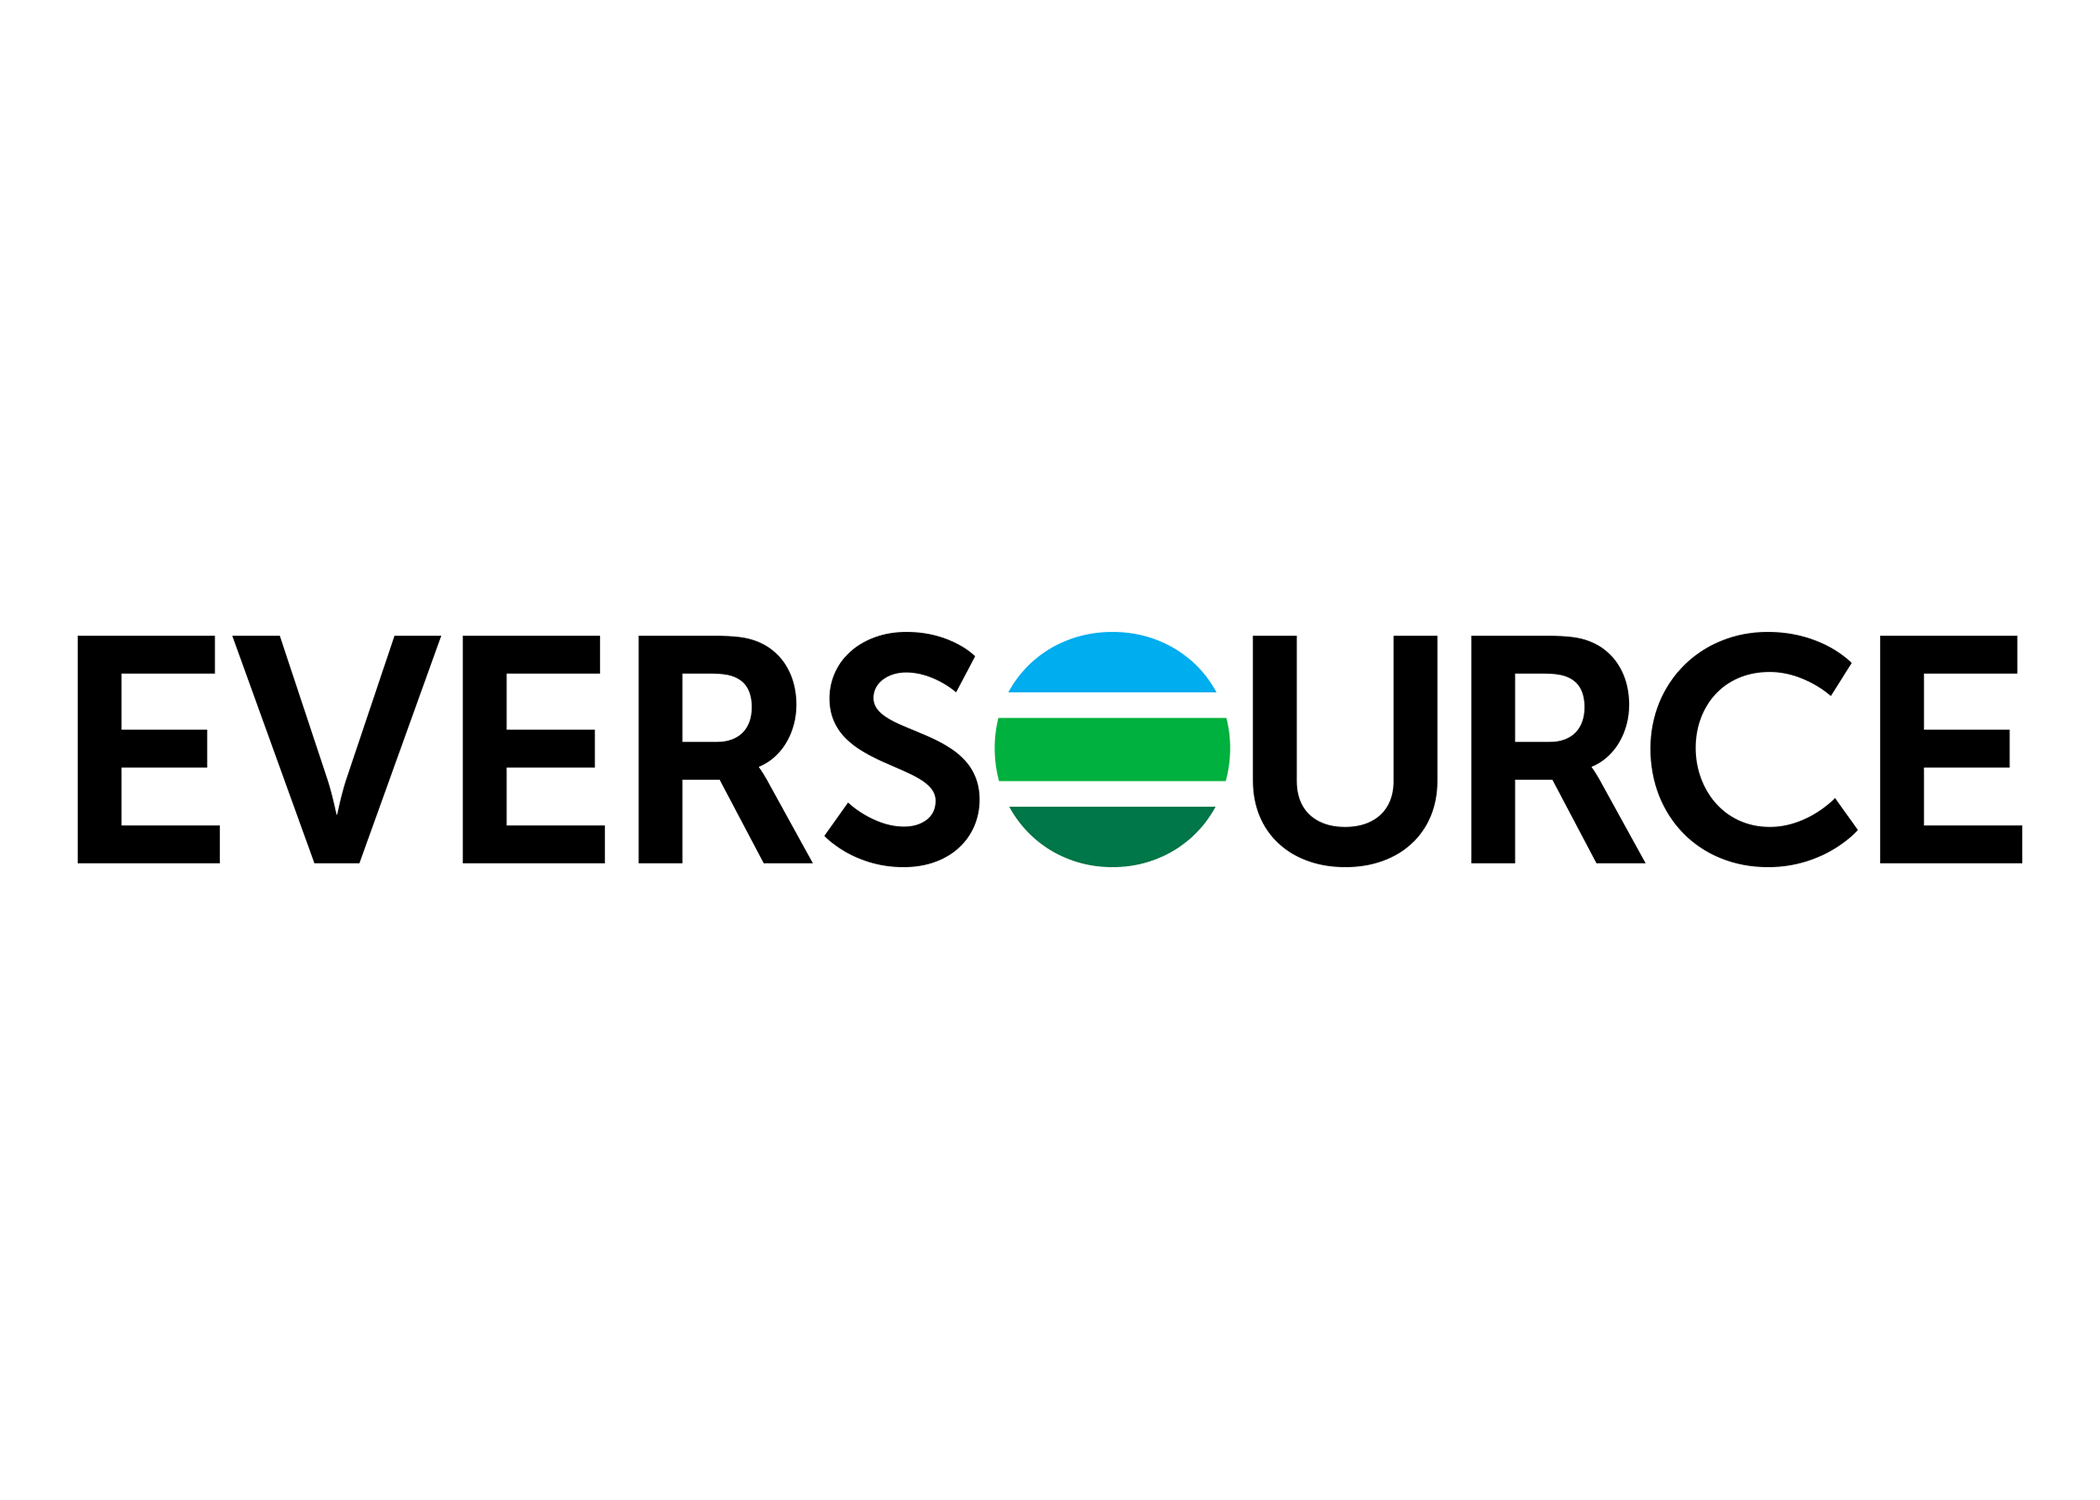 Eversource sponsor